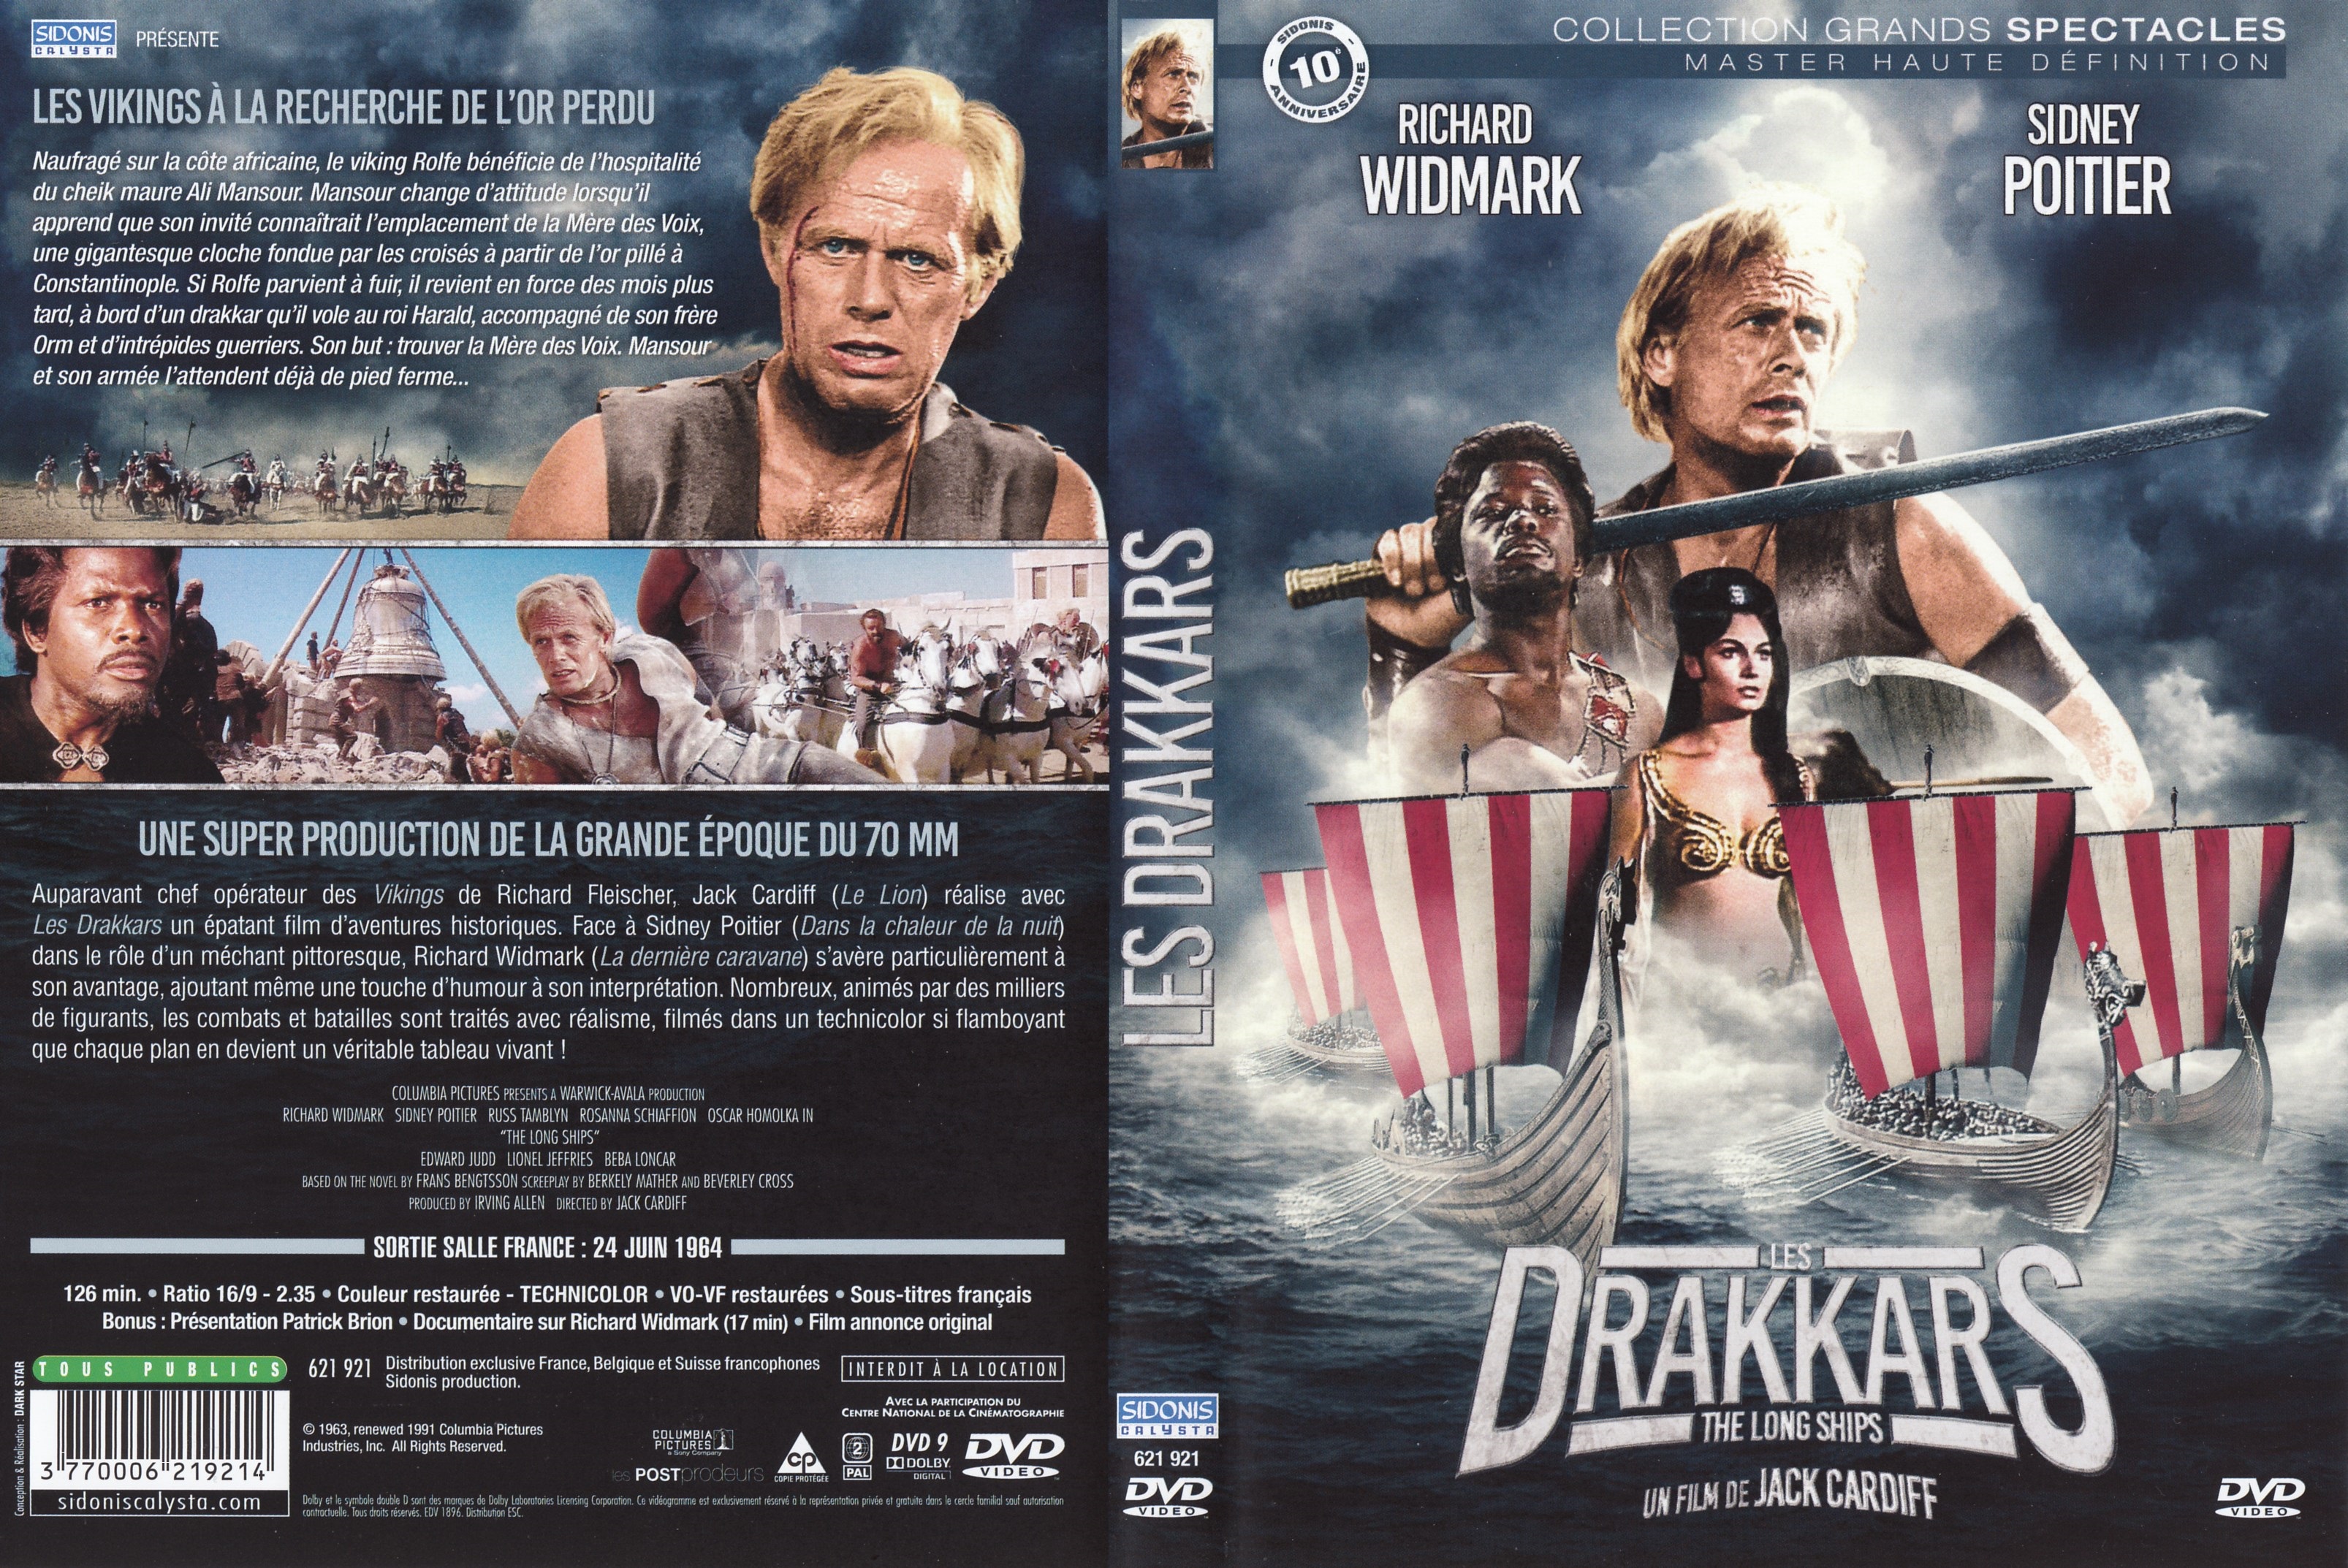 Jaquette DVD Les Drakkars